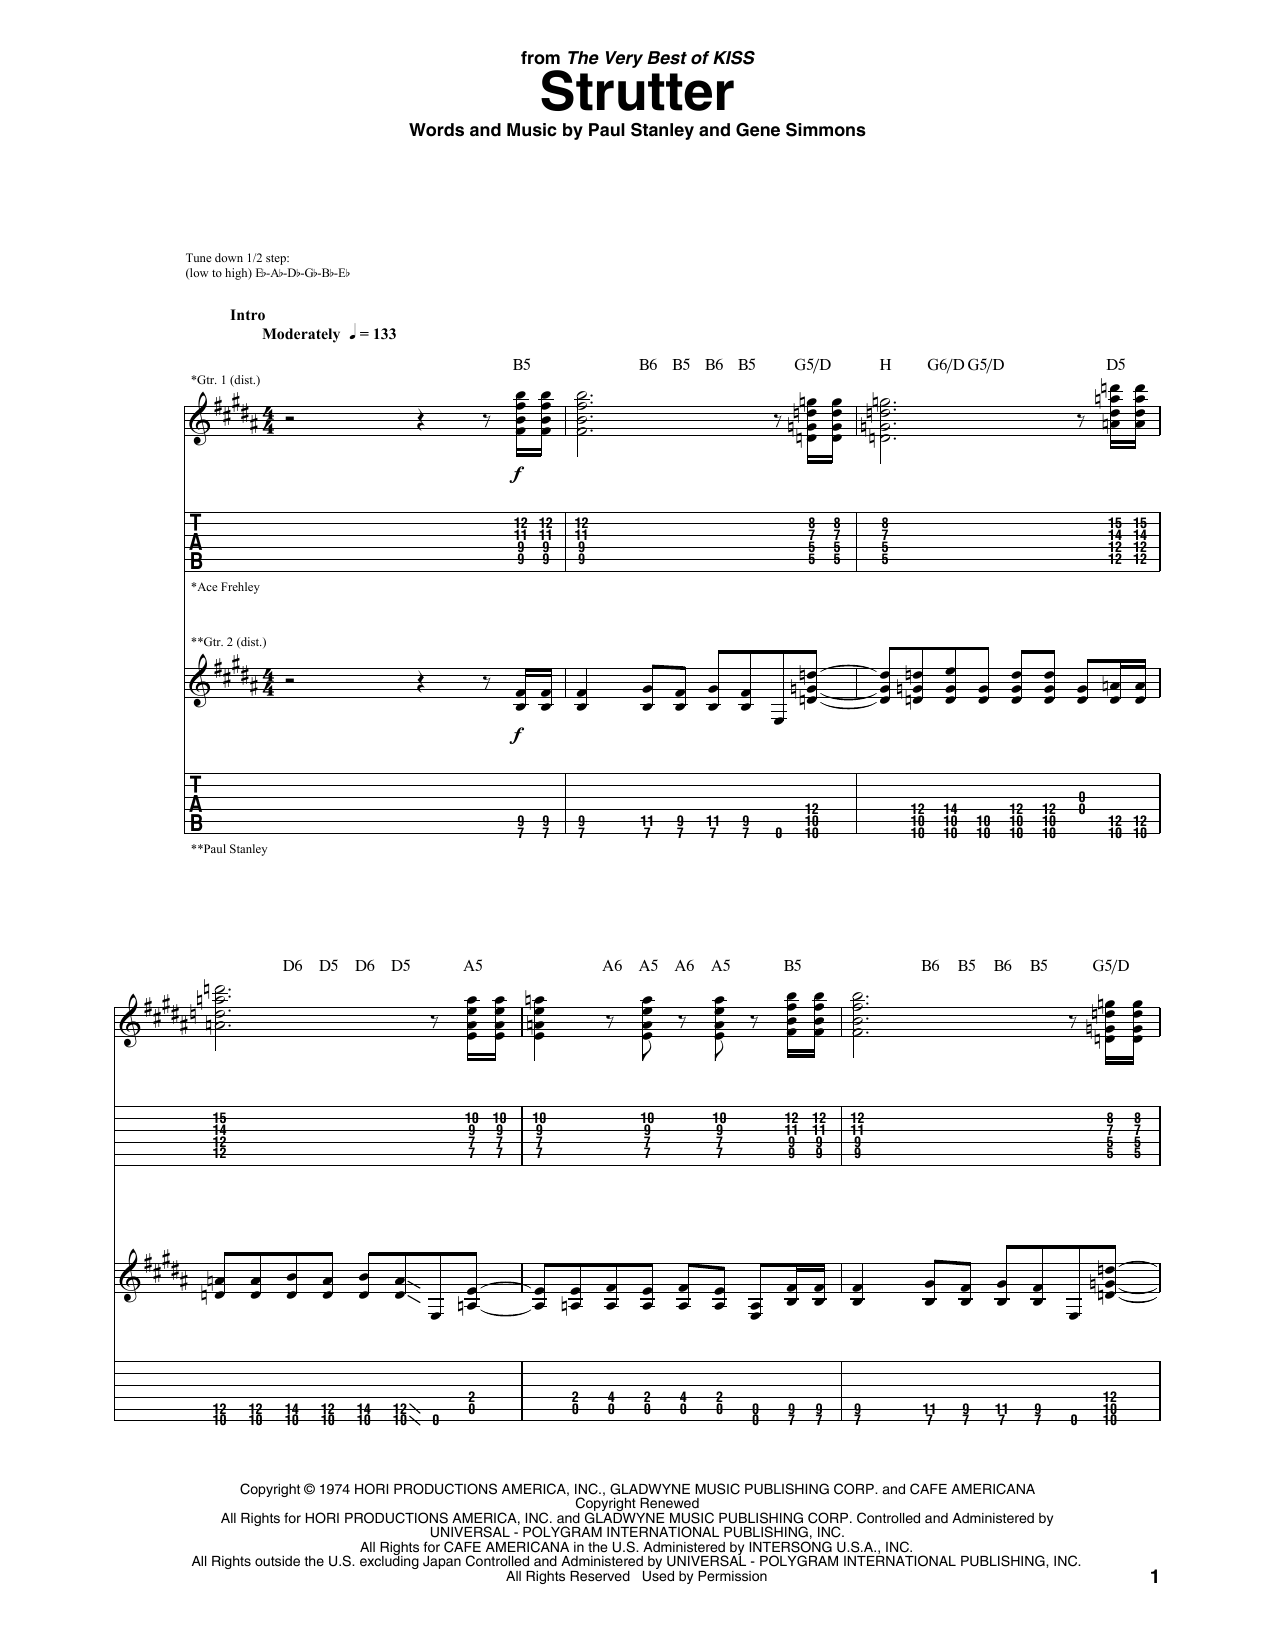 KISS Strutter Sheet Music Notes & Chords for Drums Transcription - Download or Print PDF